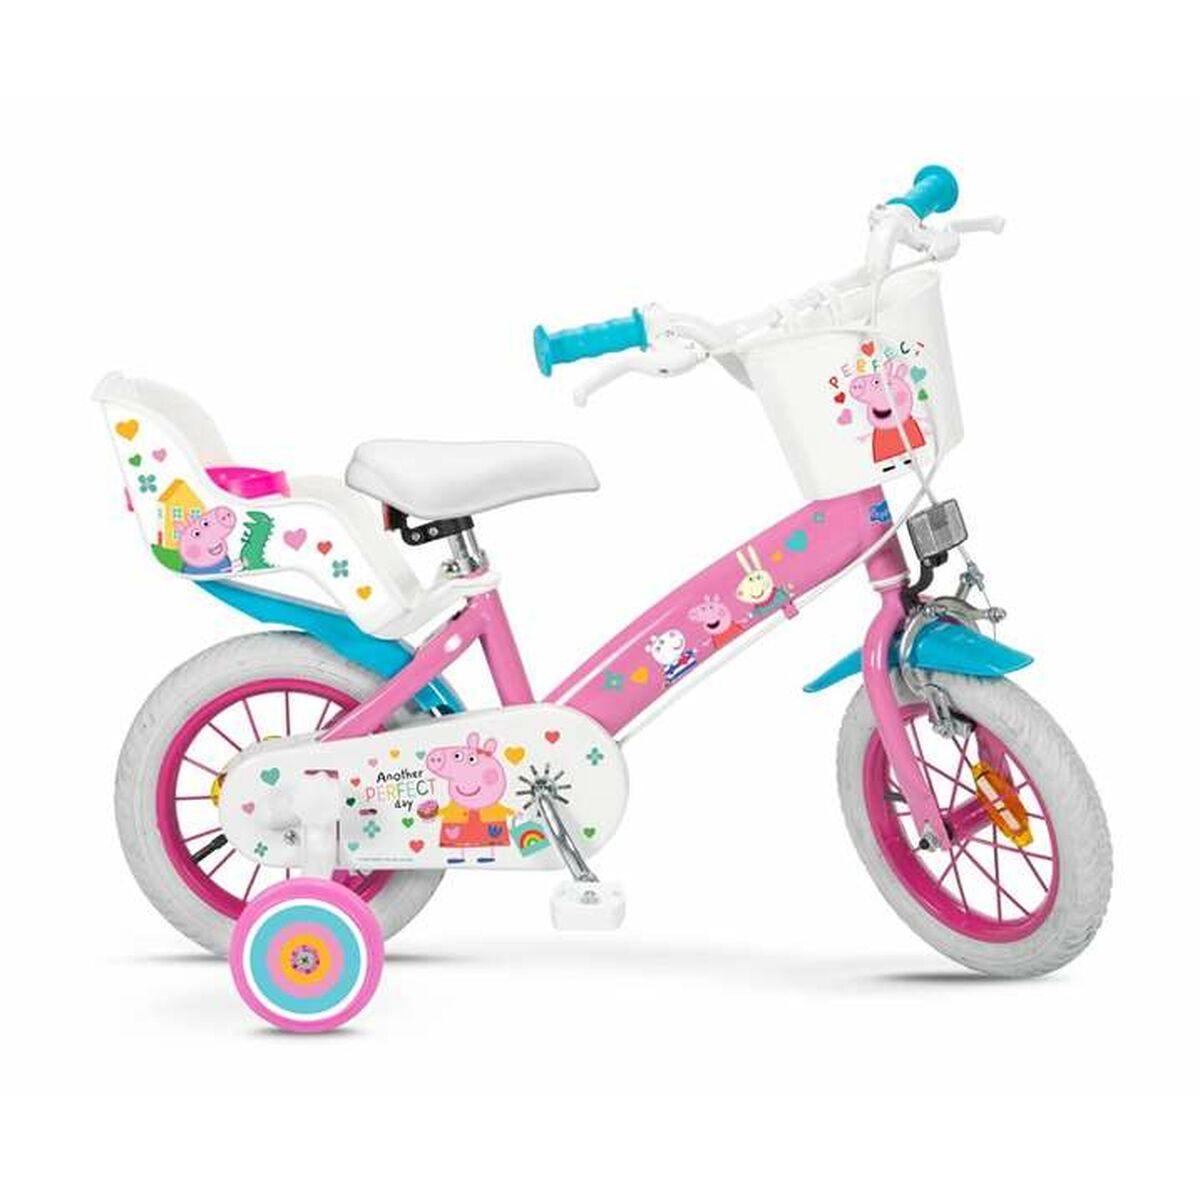 Children's Bike Peppa Pig   12" Pink